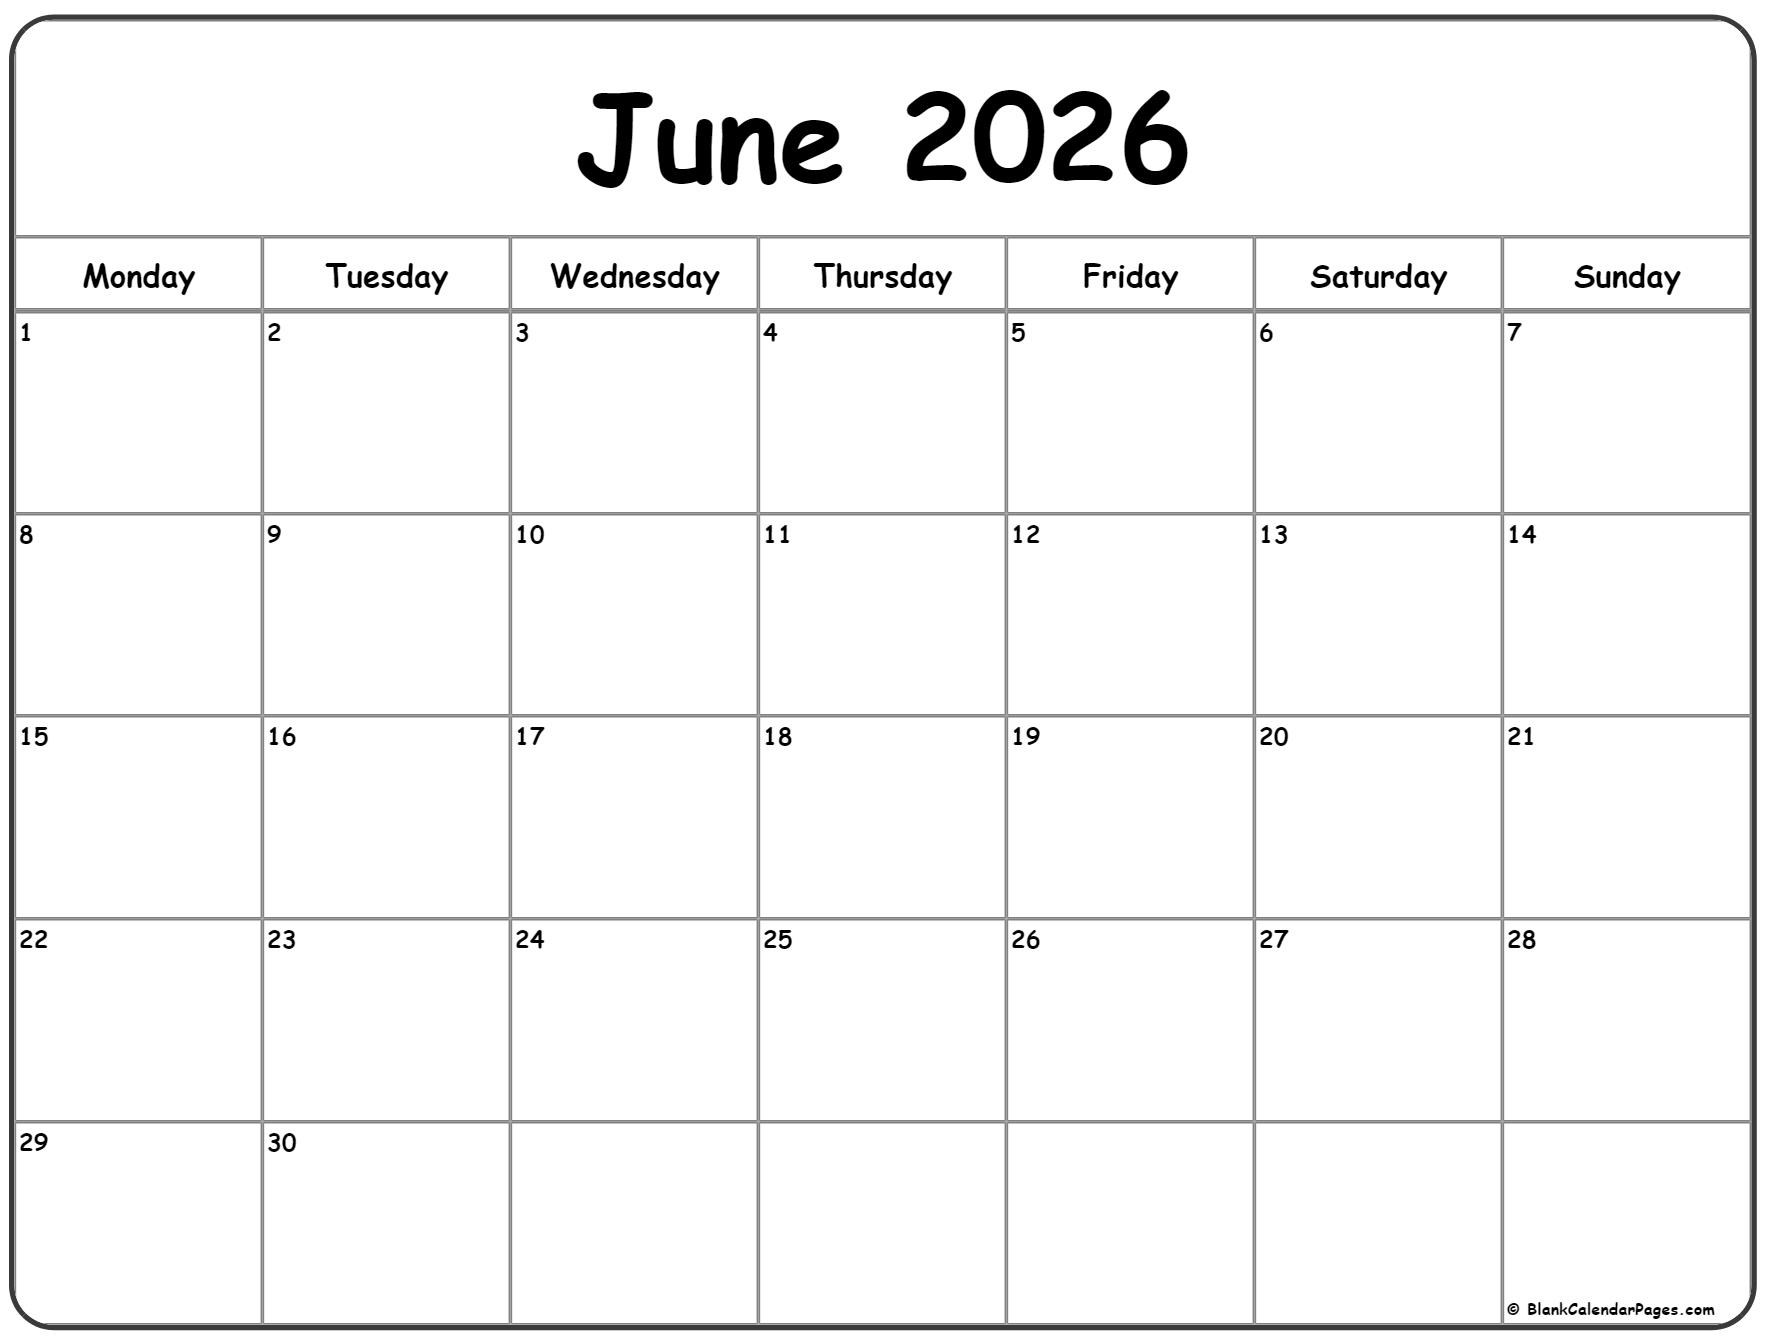 June 2026 Monday calendar. Monday to Sunday